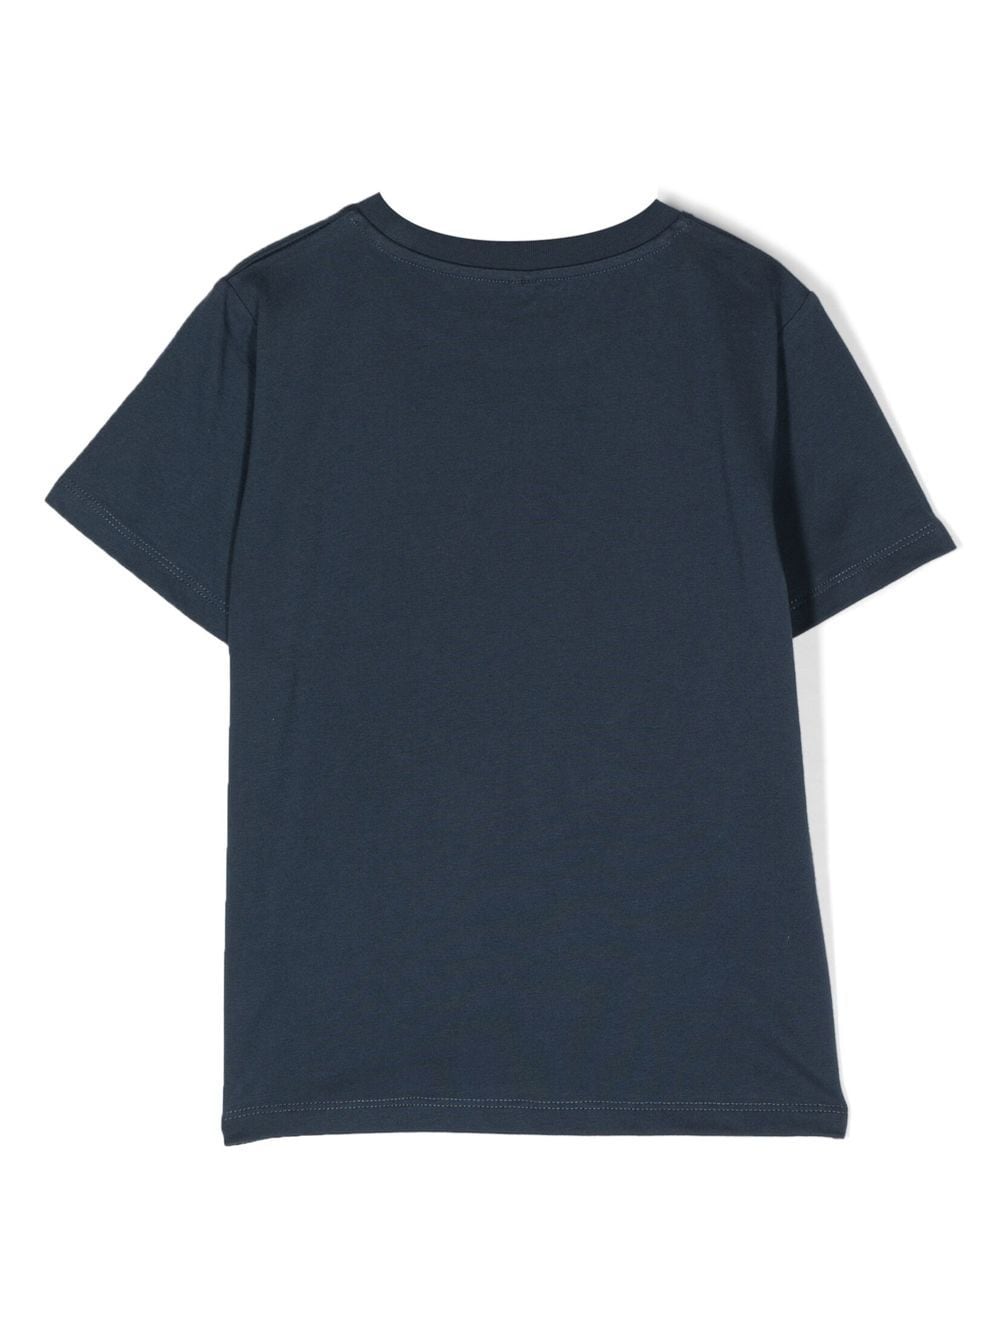 Blue children's t-shirt with logo